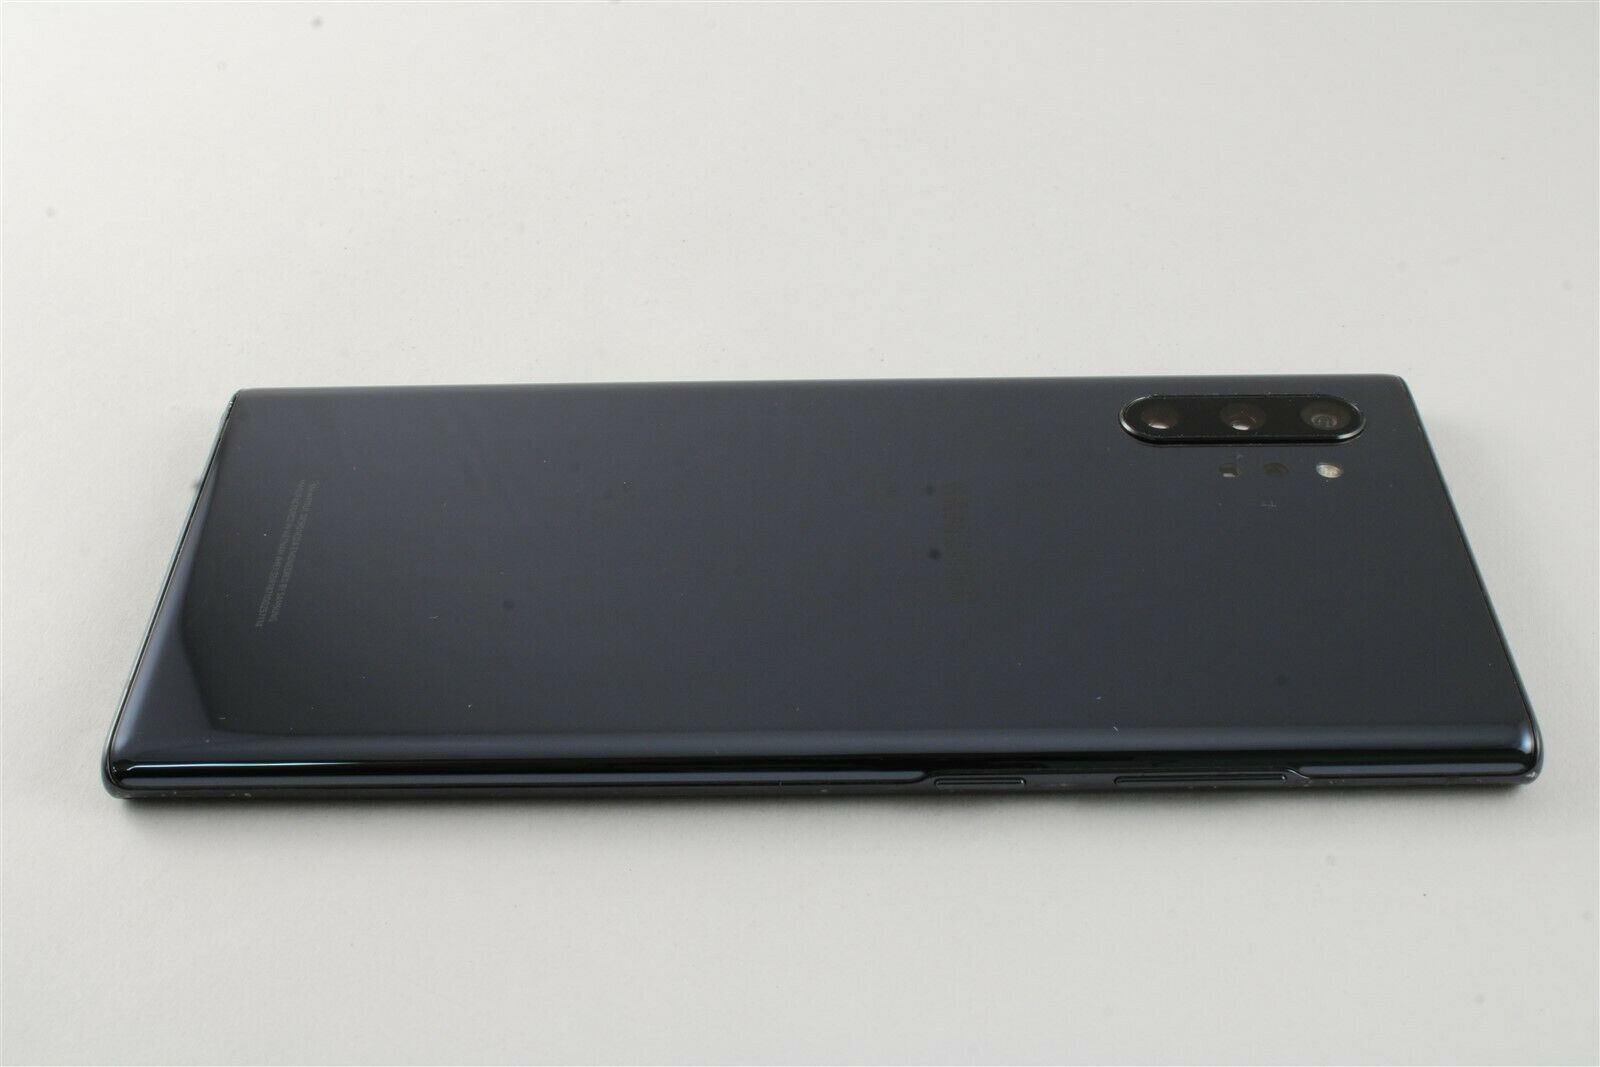  Samsung Galaxy Note 10+ Plus (256GB, 12GB) 6.8 QHD+ AMOLED,  Snapdragon 855, 4300mAh Battery, 4G LTE Fully Unlocked (T-Mobile, Verizon,  Global) N975U1 (w/Wireless Charger Pad, Aura Black)